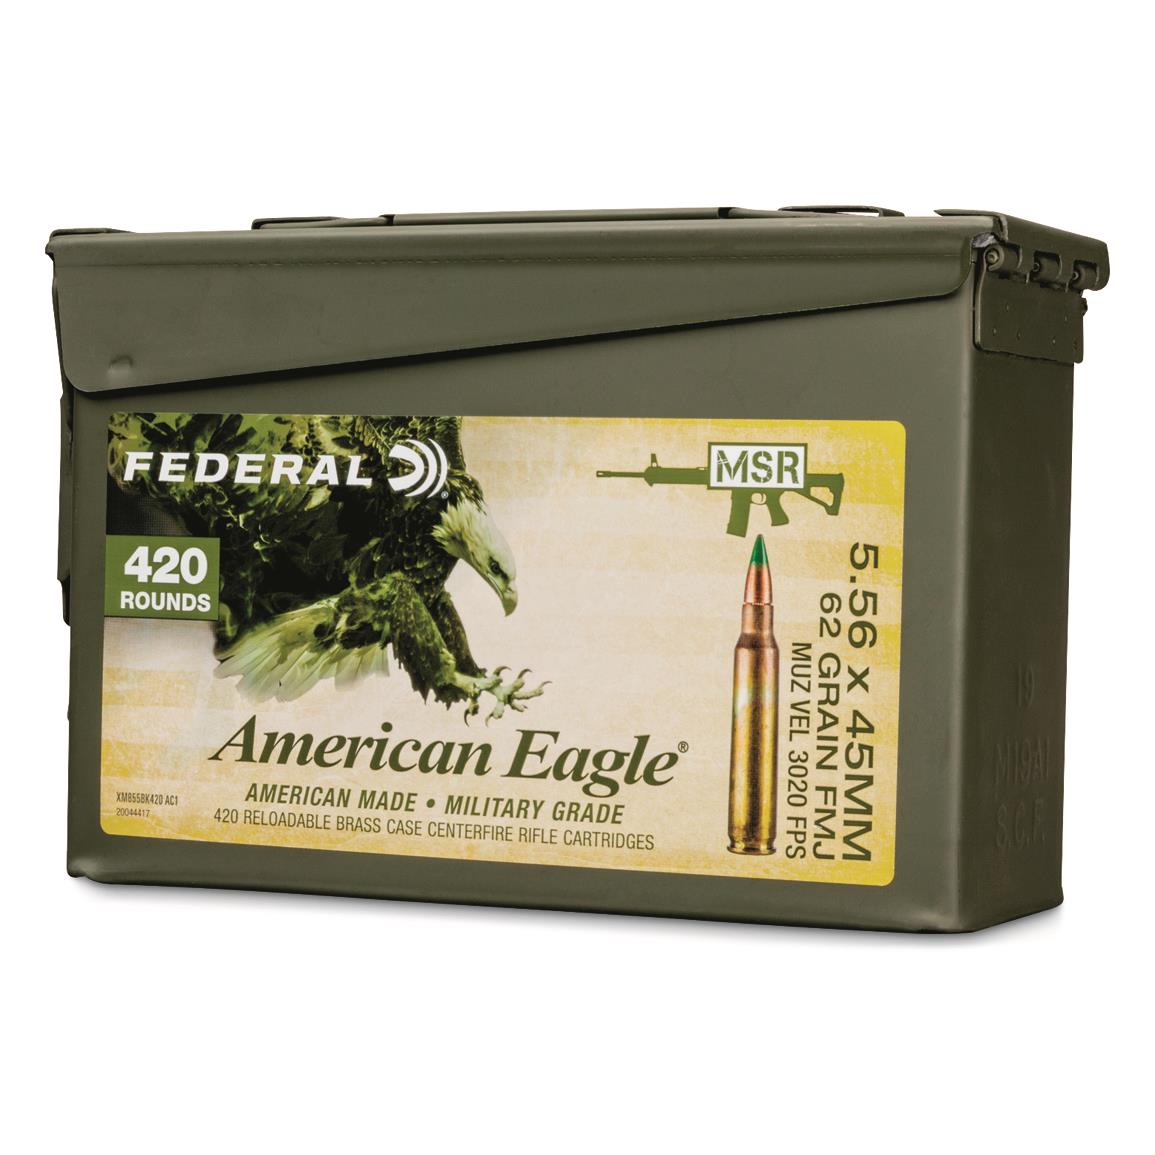 420-round-federal-american-eagle-5-56-nato-62gr-fmjbt-ammo-can